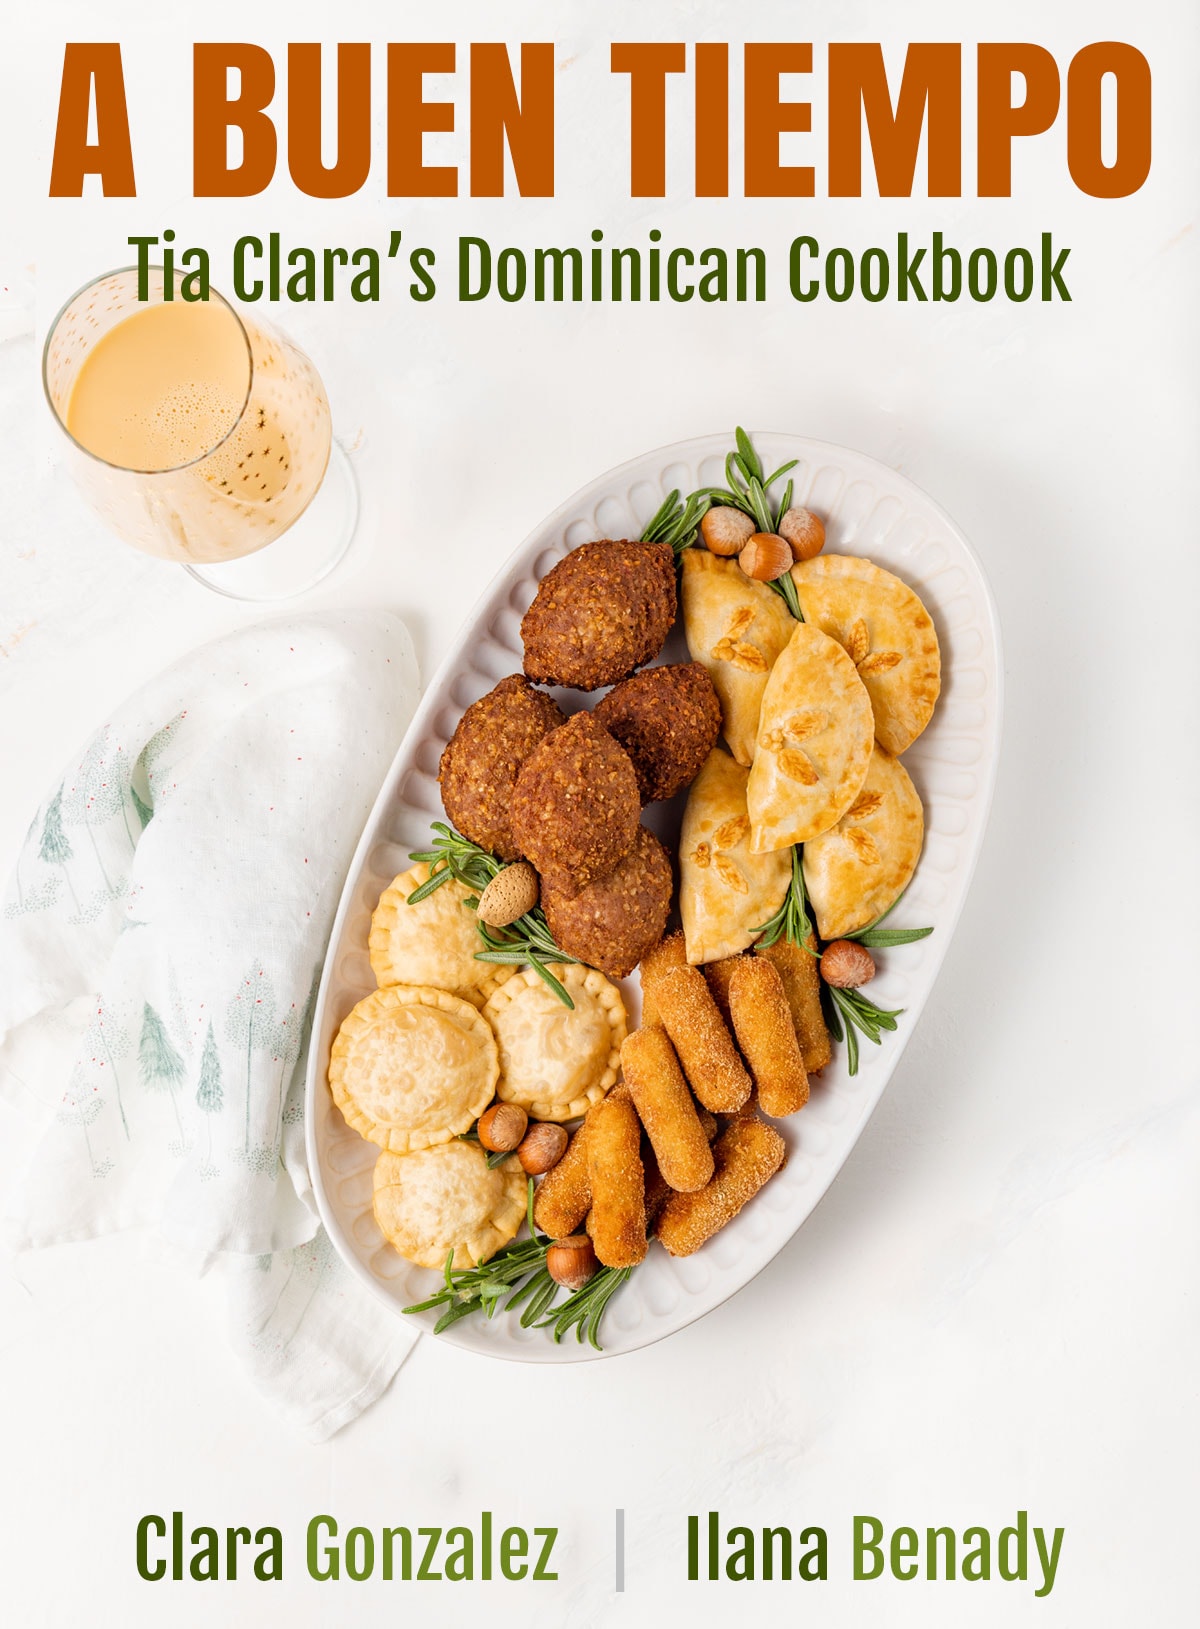 Tia Clara's Dominican Cookbook.